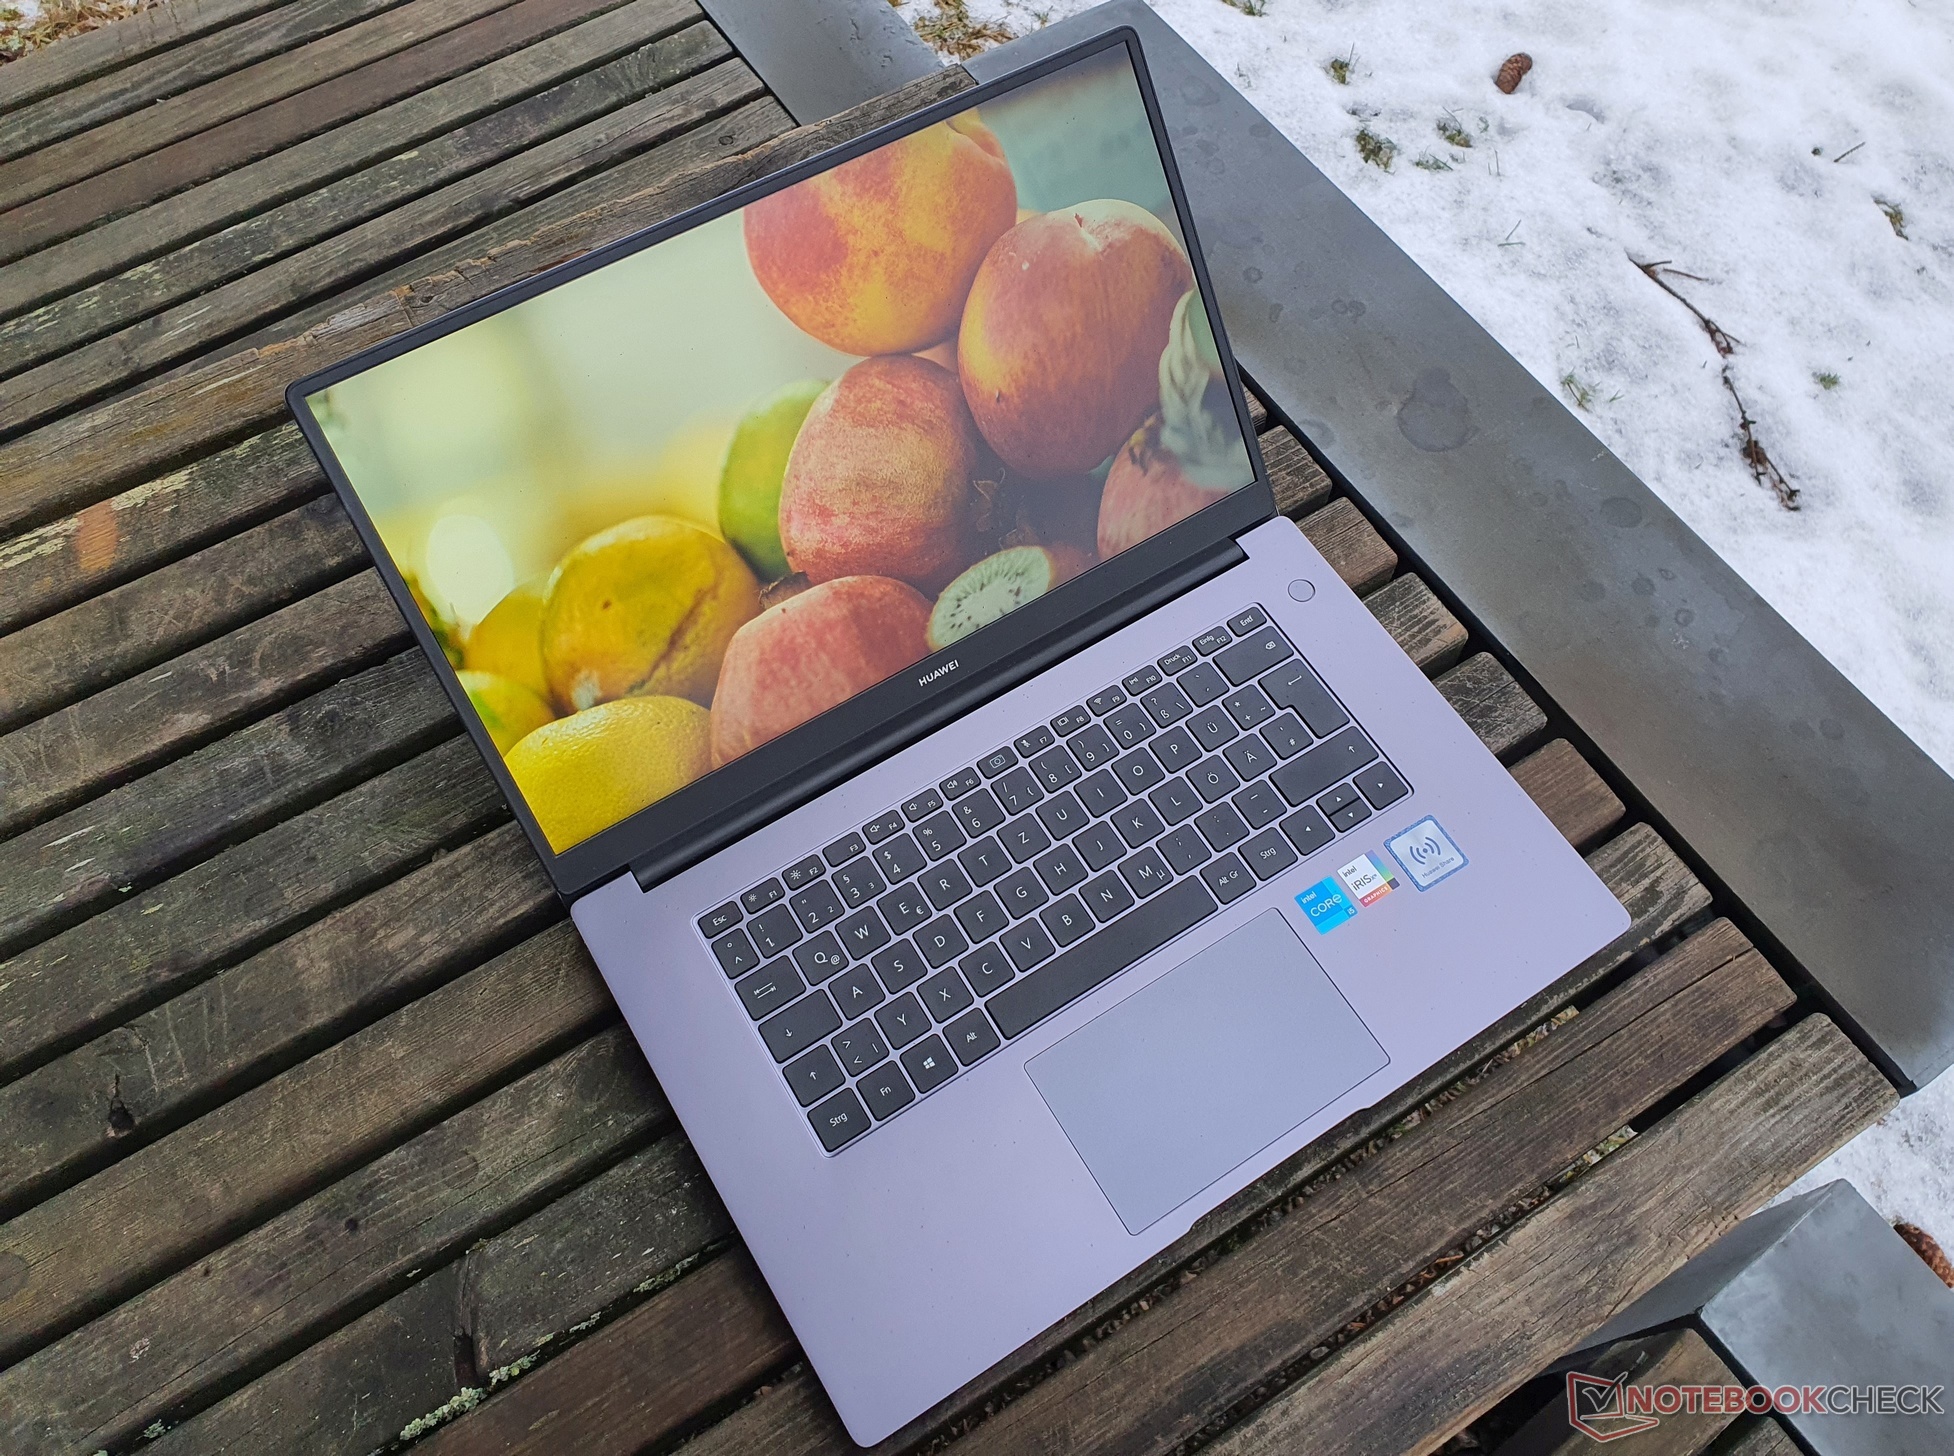 Huawei MateBook D 15 Intel laptop review: Inexpensive quiet runner -   Reviews